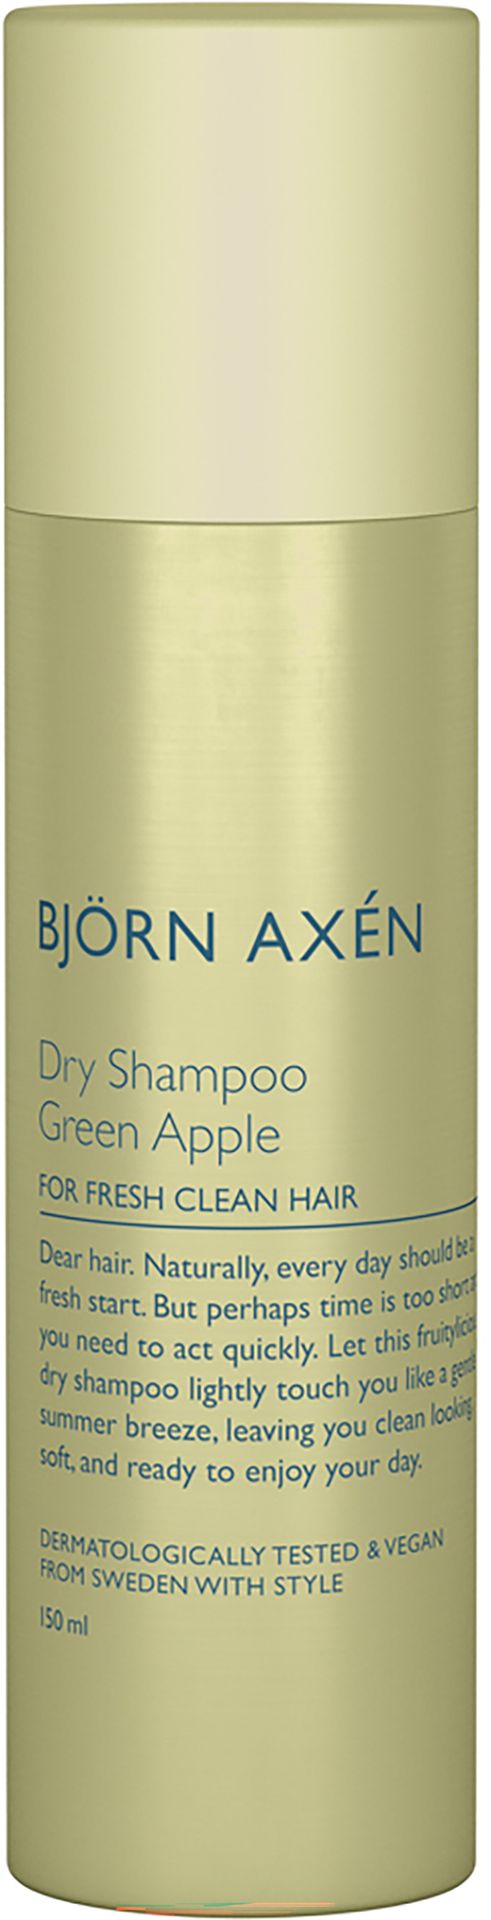 BJÖRN AXÉN Dry Shampoo Green Apple 150 ml 150.0 ml